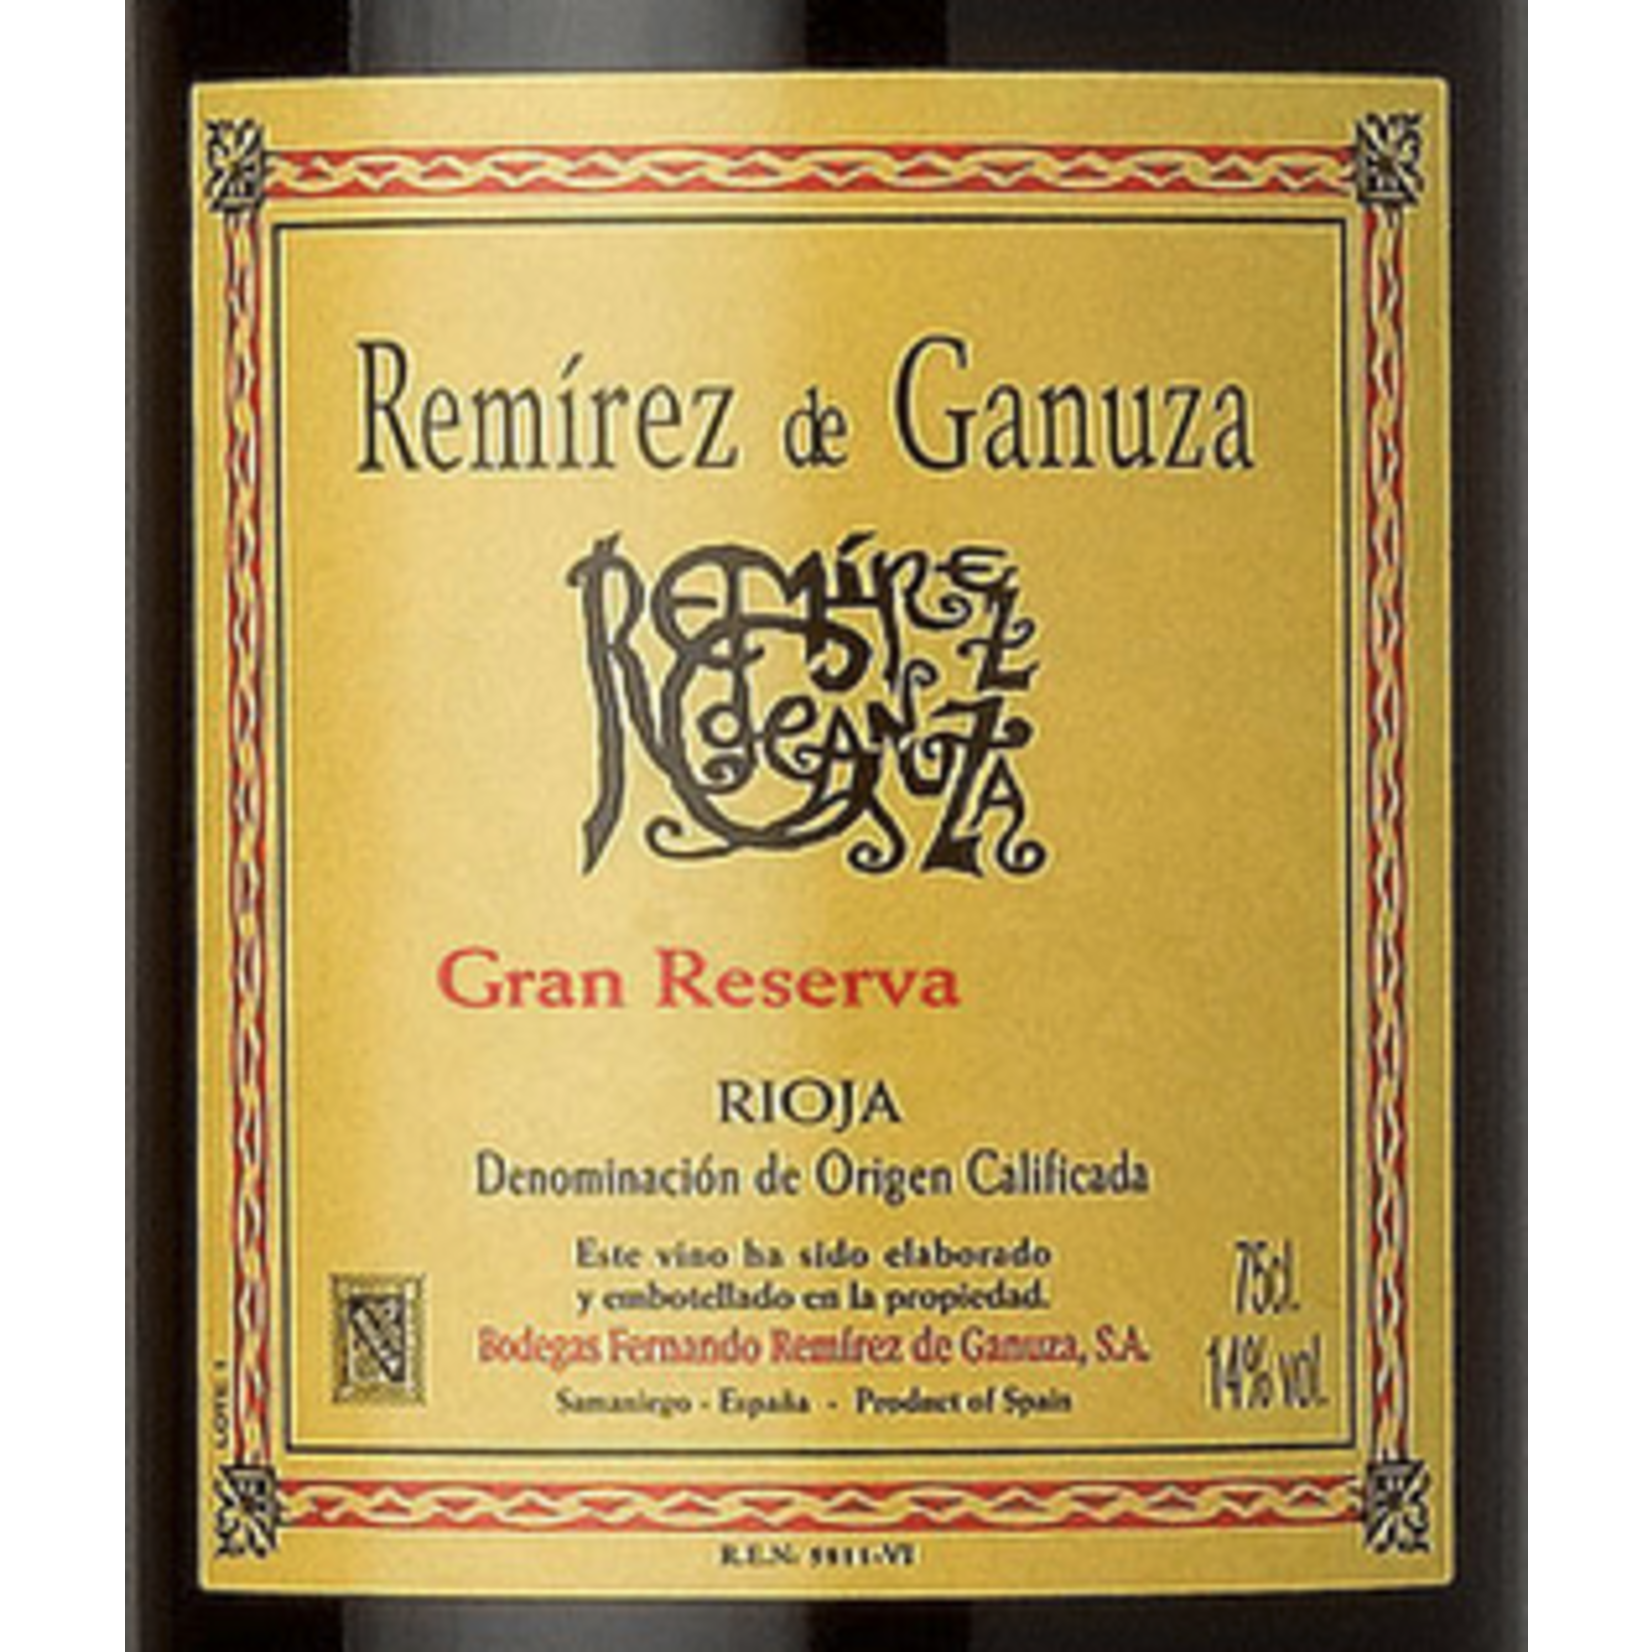 Wine Remirez de Ganuza Gran Reserva Rioja DOCa 2013